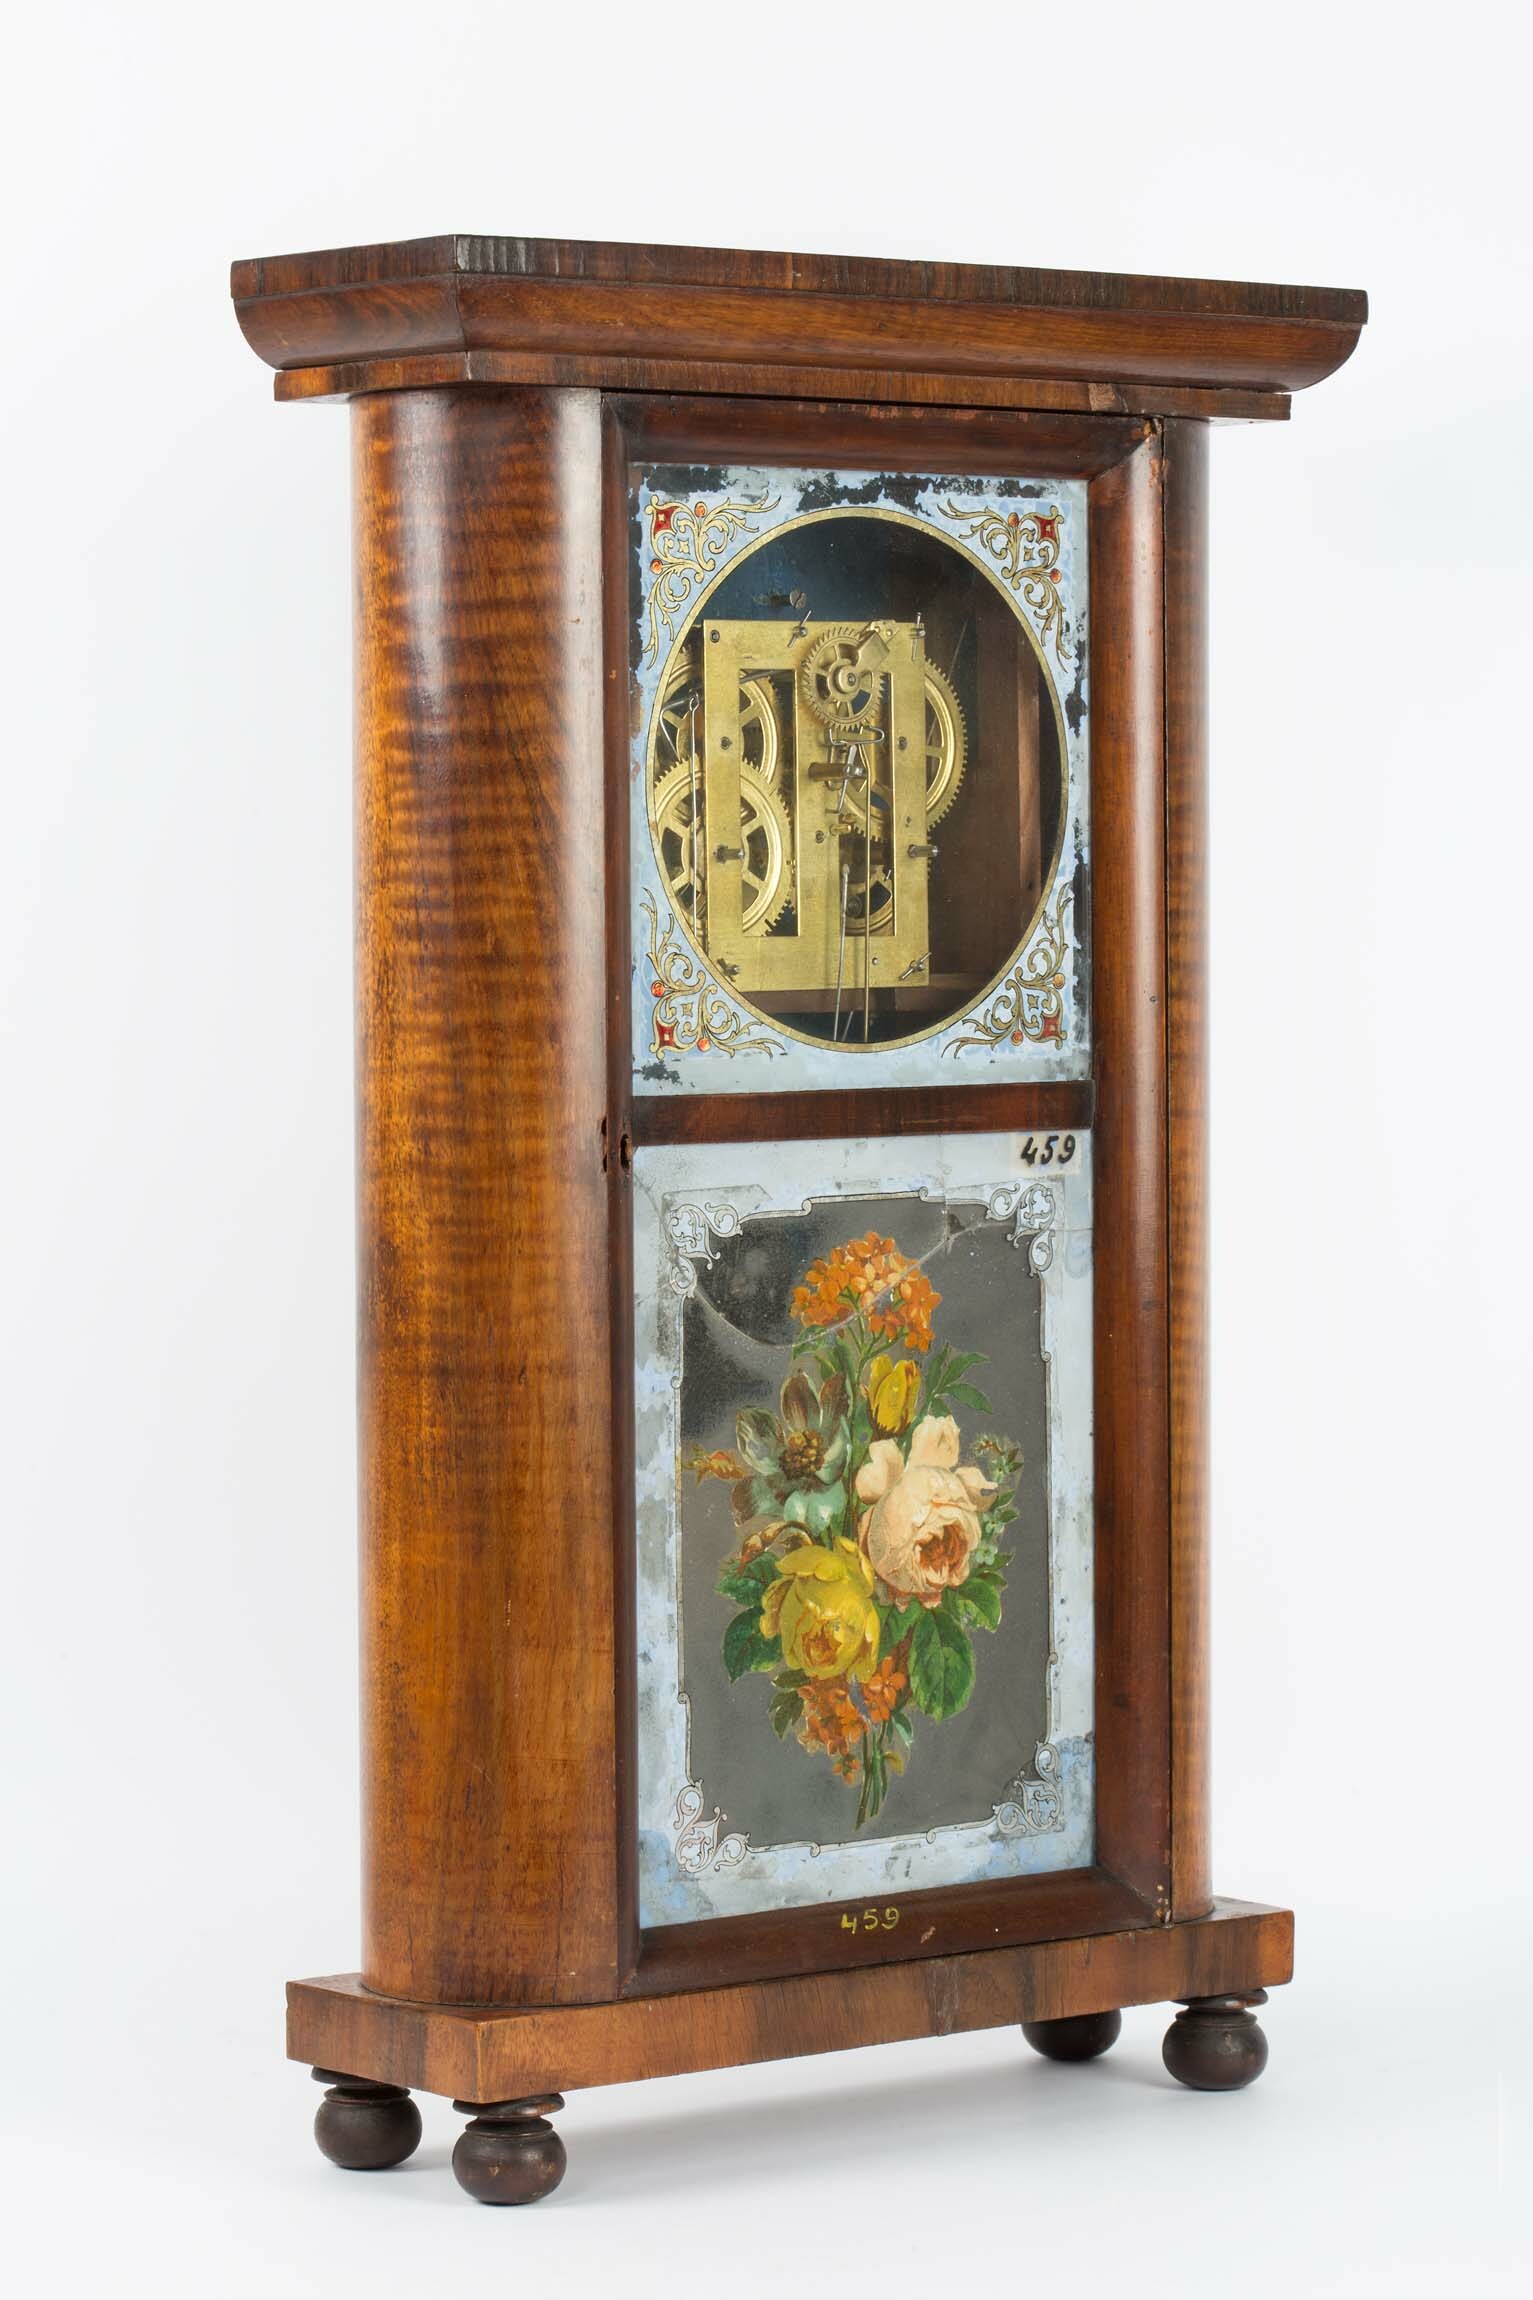 Wanduhr (OG Clock), C. und N. Jerome, Bristol (USA), um 1840 (Deutsches Uhrenmuseum CC BY-SA)